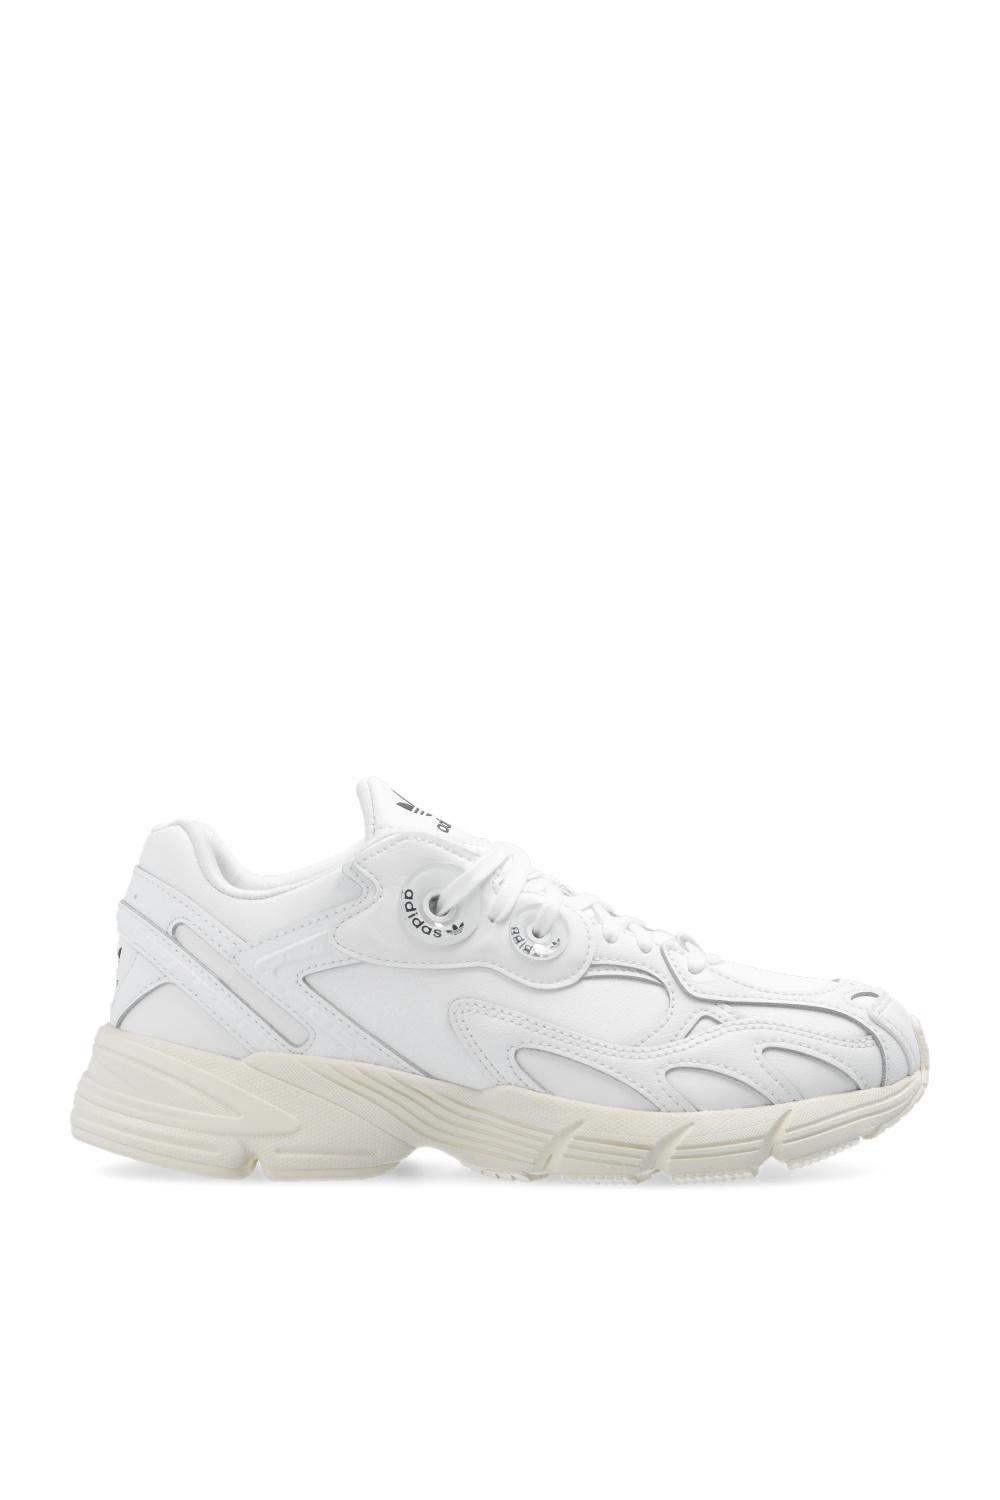 adidas Originals 'astir' Sneakers in White | Lyst